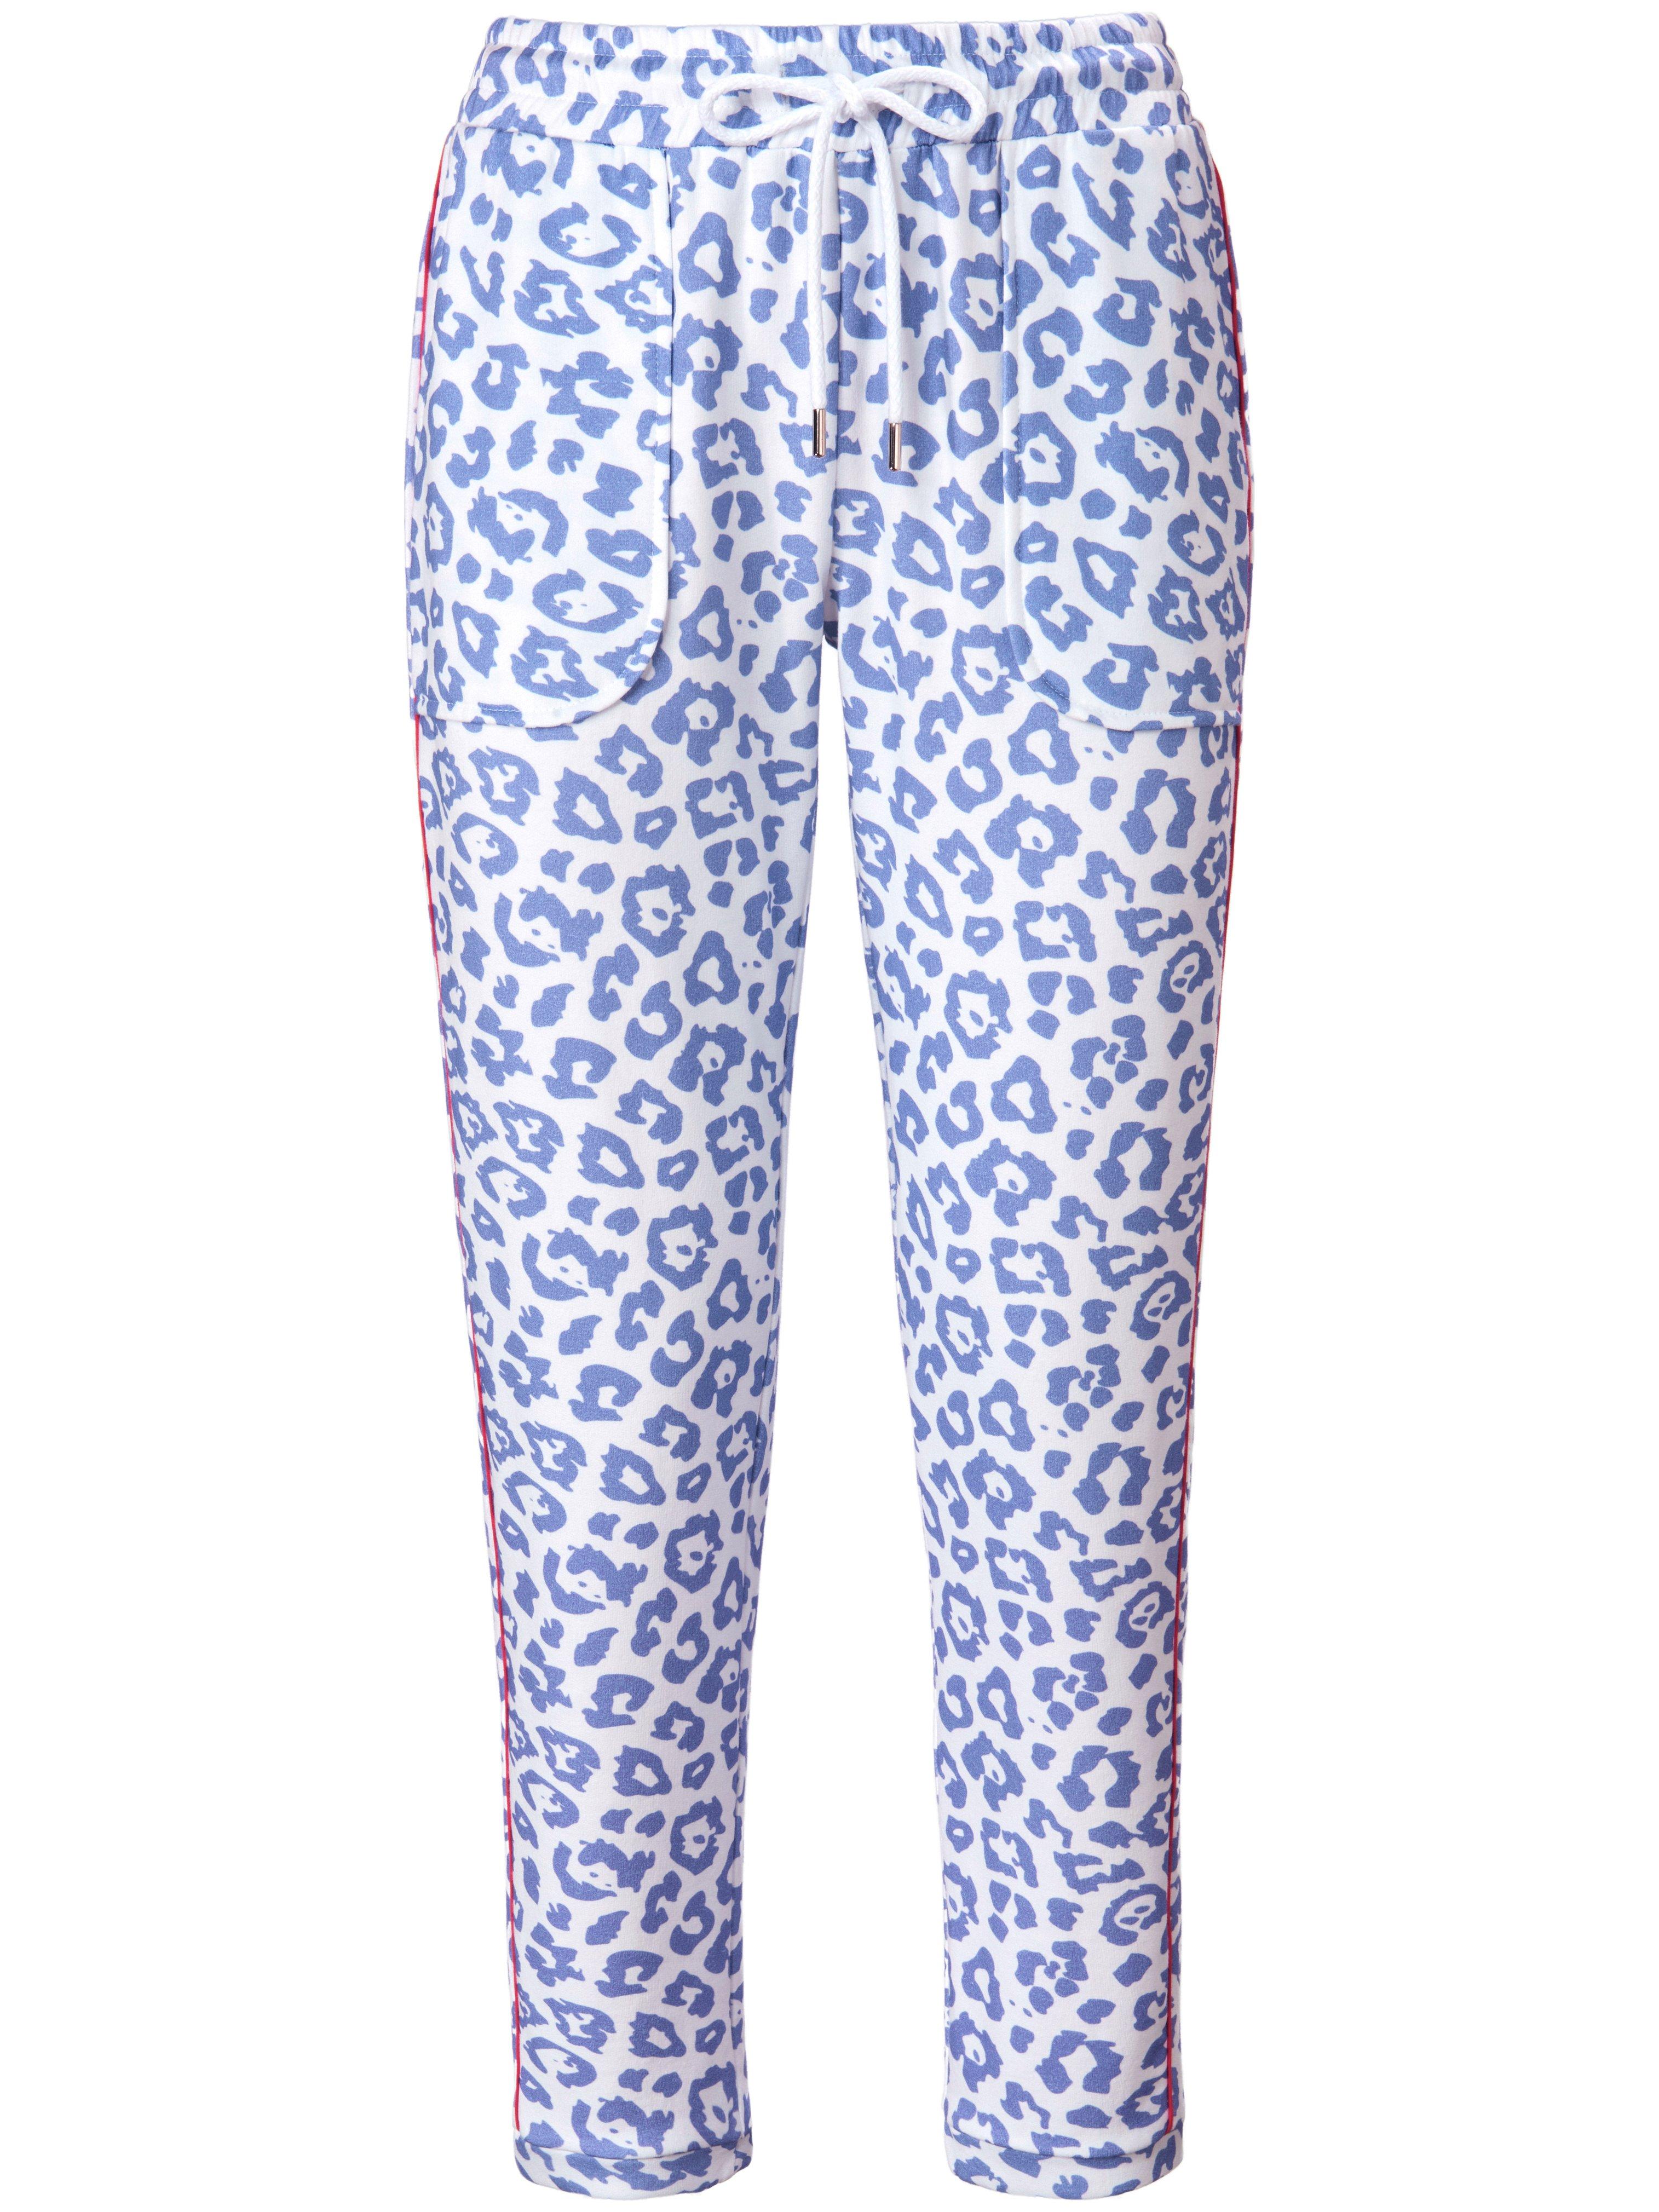 Le pantalon sweat imprimé léopard  MYBC bleu